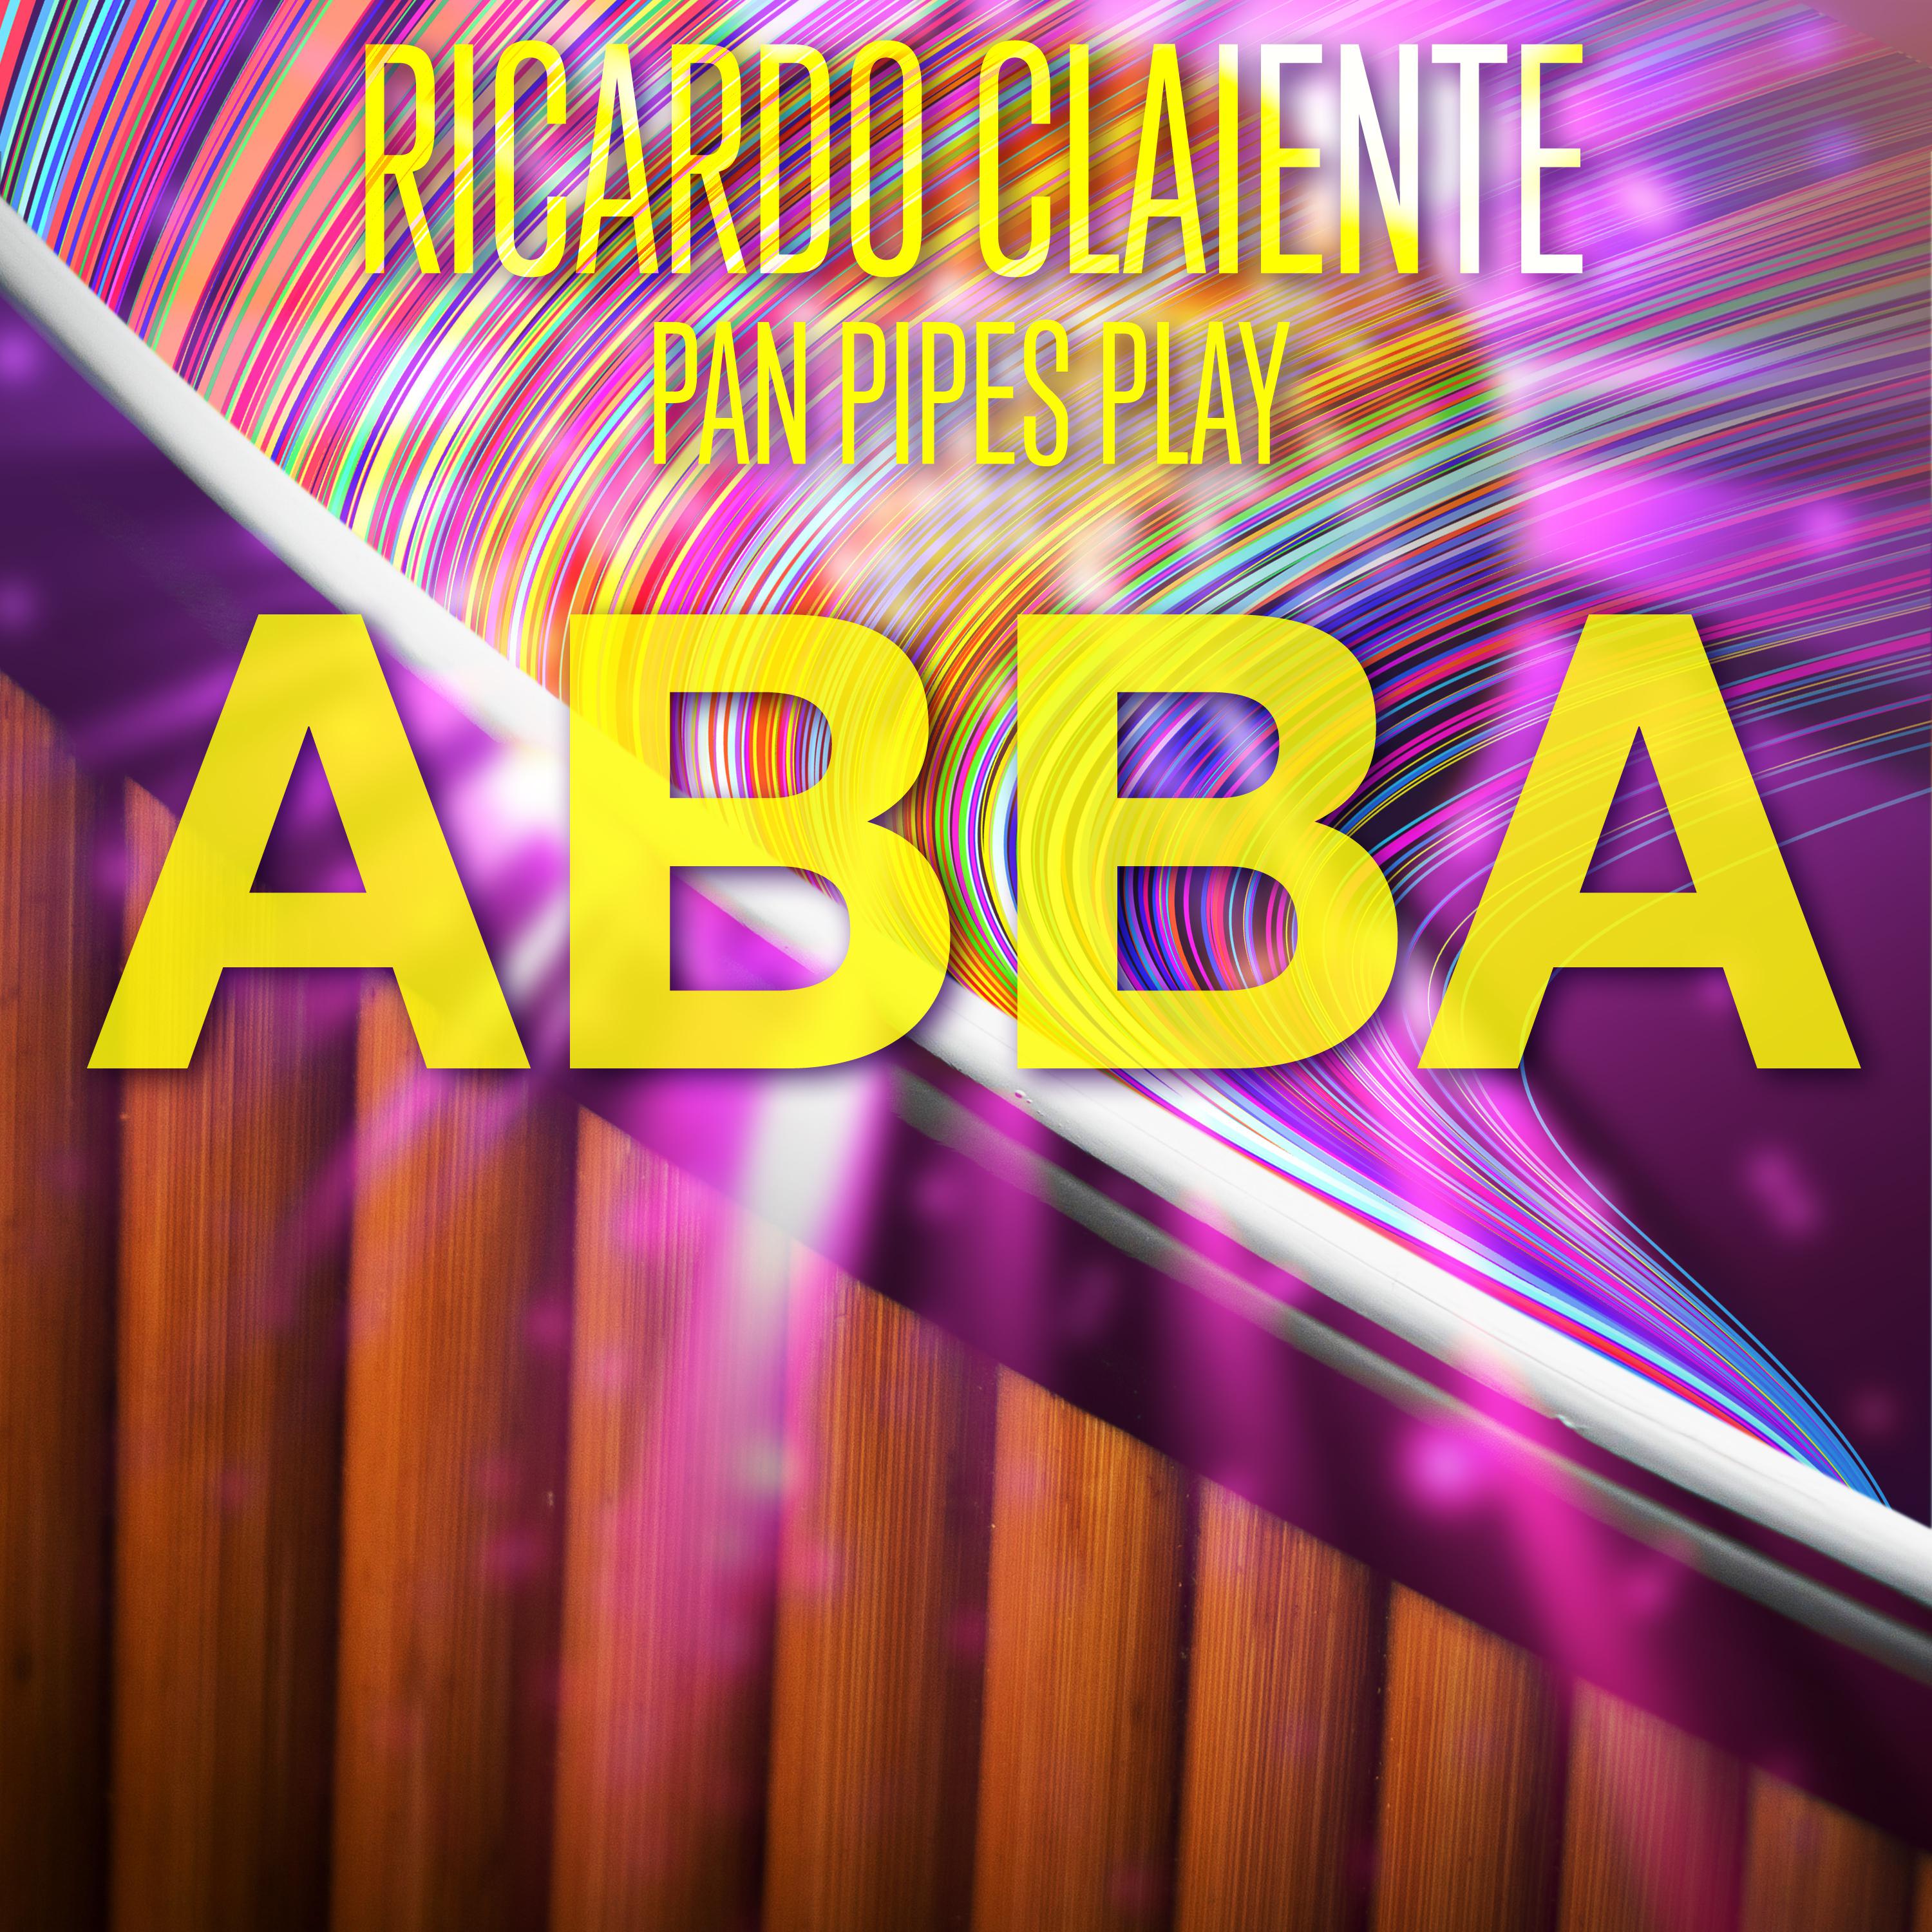 Pan Pipes play Abba